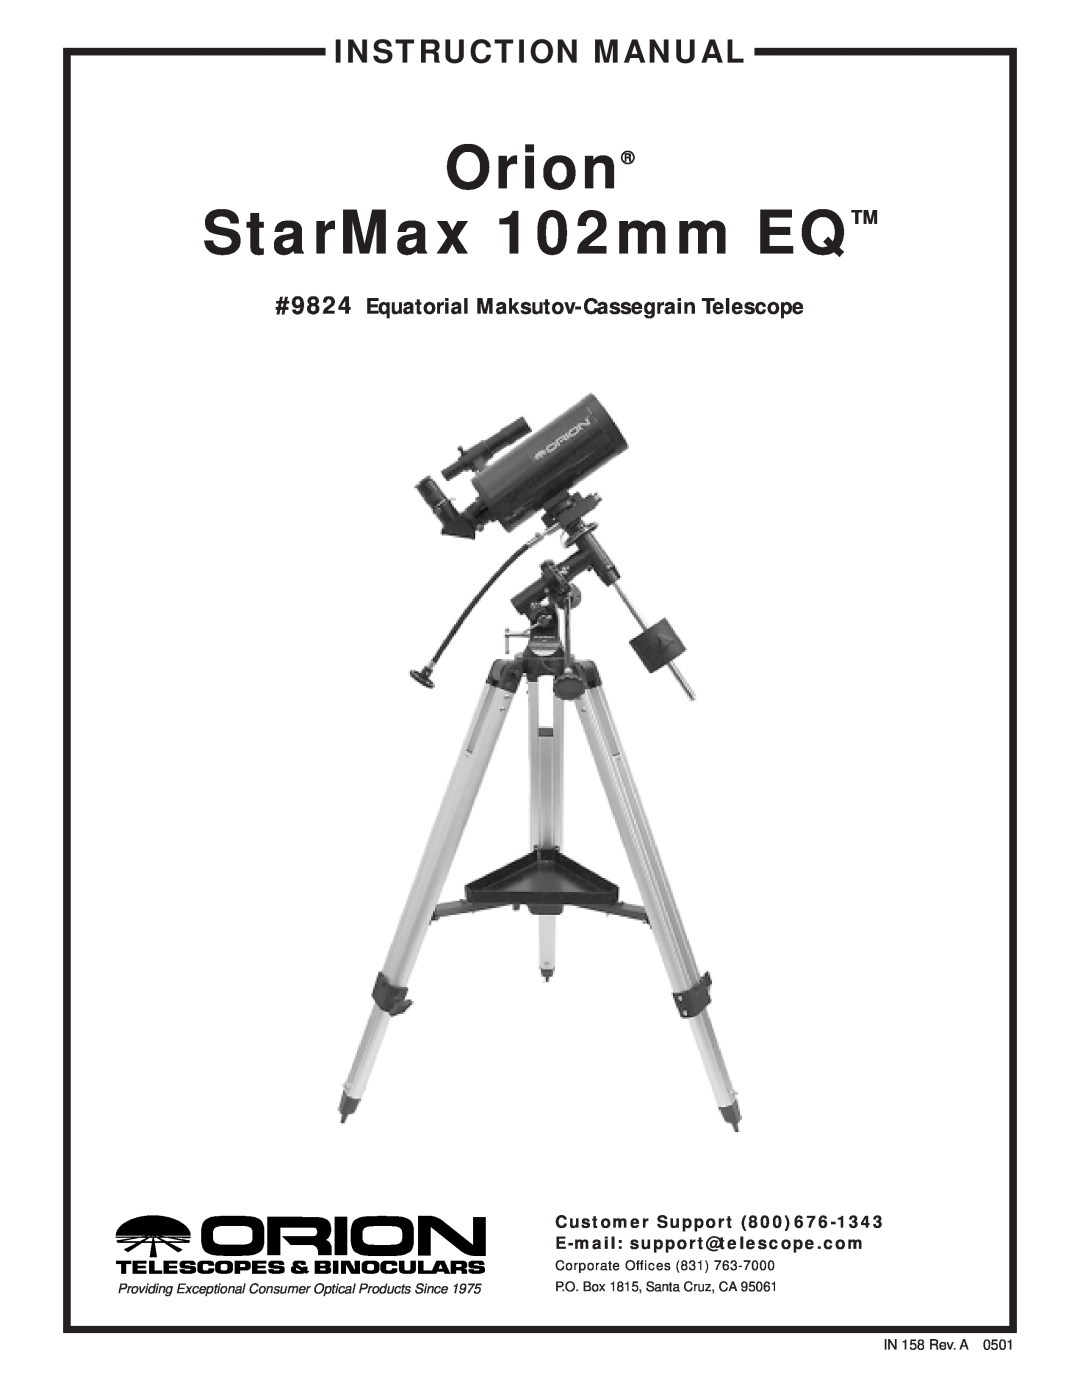 Orion instruction manual #9824 Equatorial Maksutov-Cassegrain Telescope, Customer Support 800, Orion StarMax 102mm EQ 